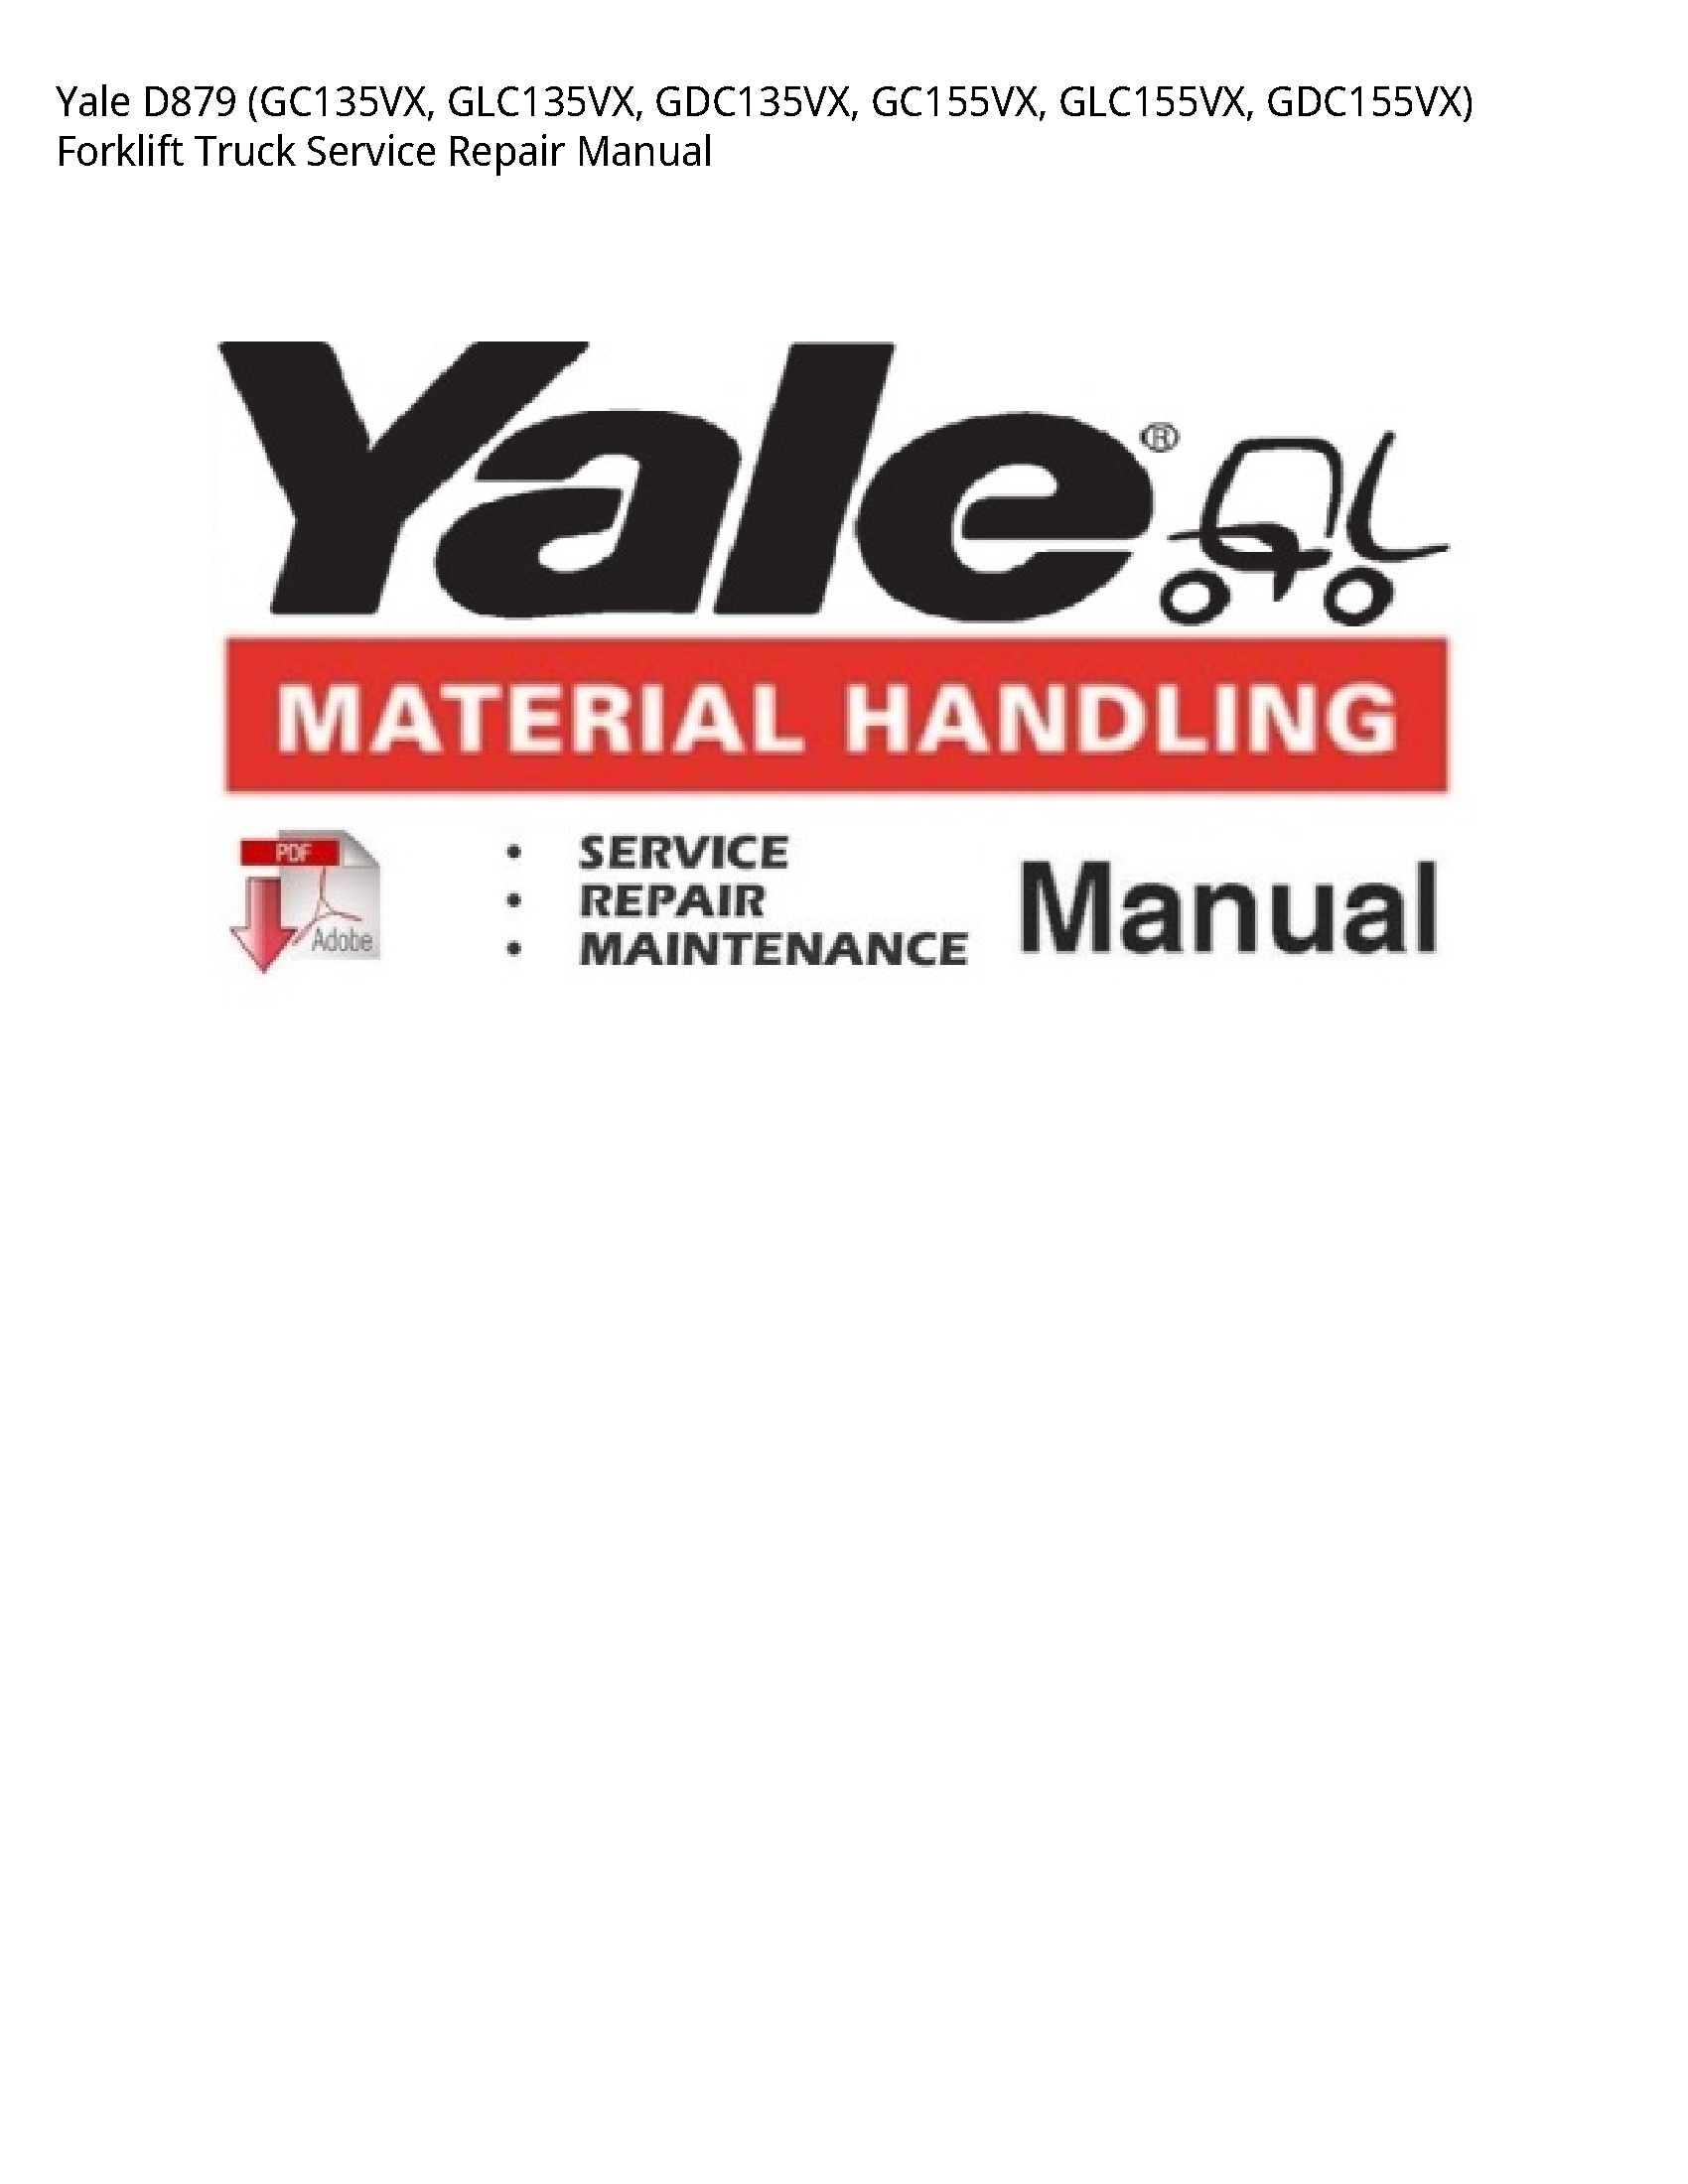 Yale D879 Forklift Truck manual